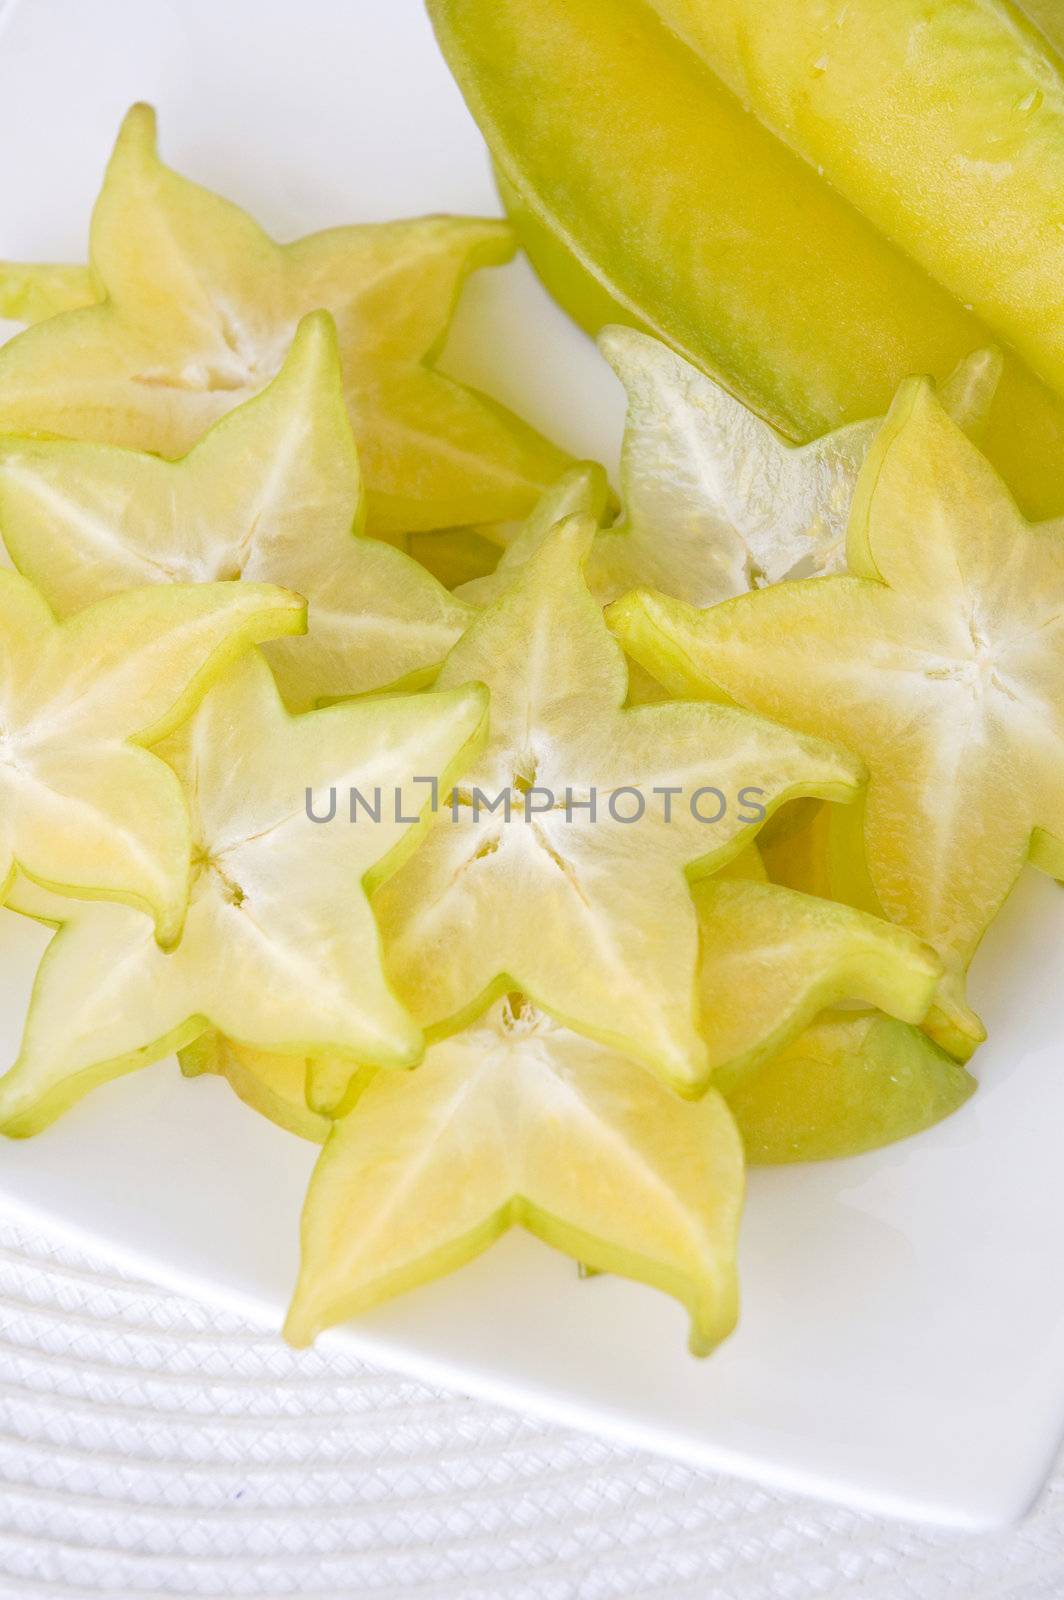 close up sliced starfruit on plate